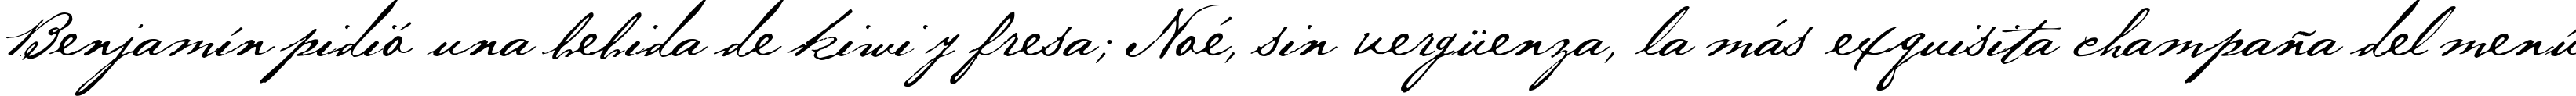 Пример написания шрифтом BakerScript текста на испанском